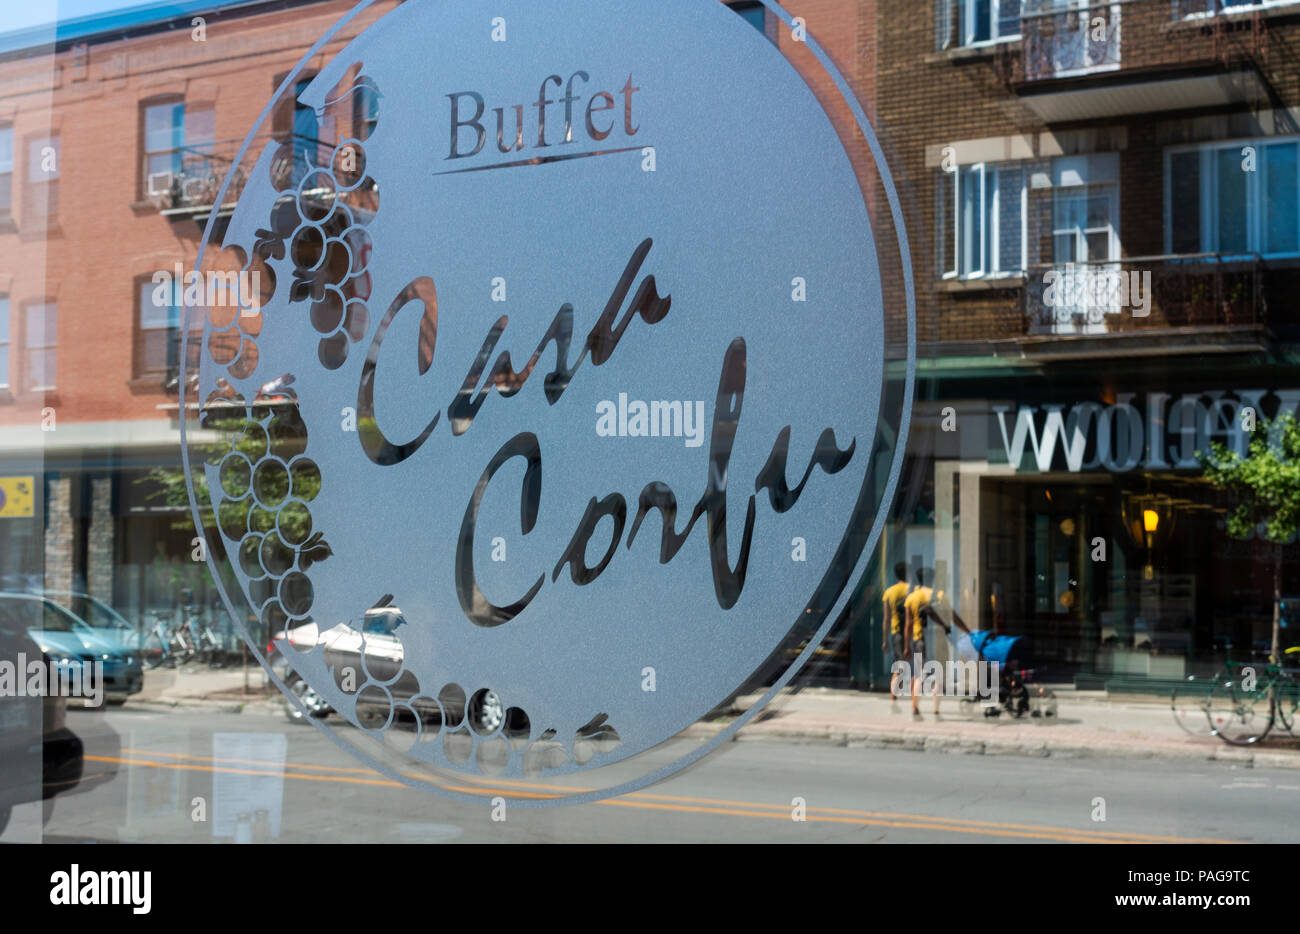 A window of Buffet Casa Corfu, a restaurant in Montreal, Canada Stock Photo